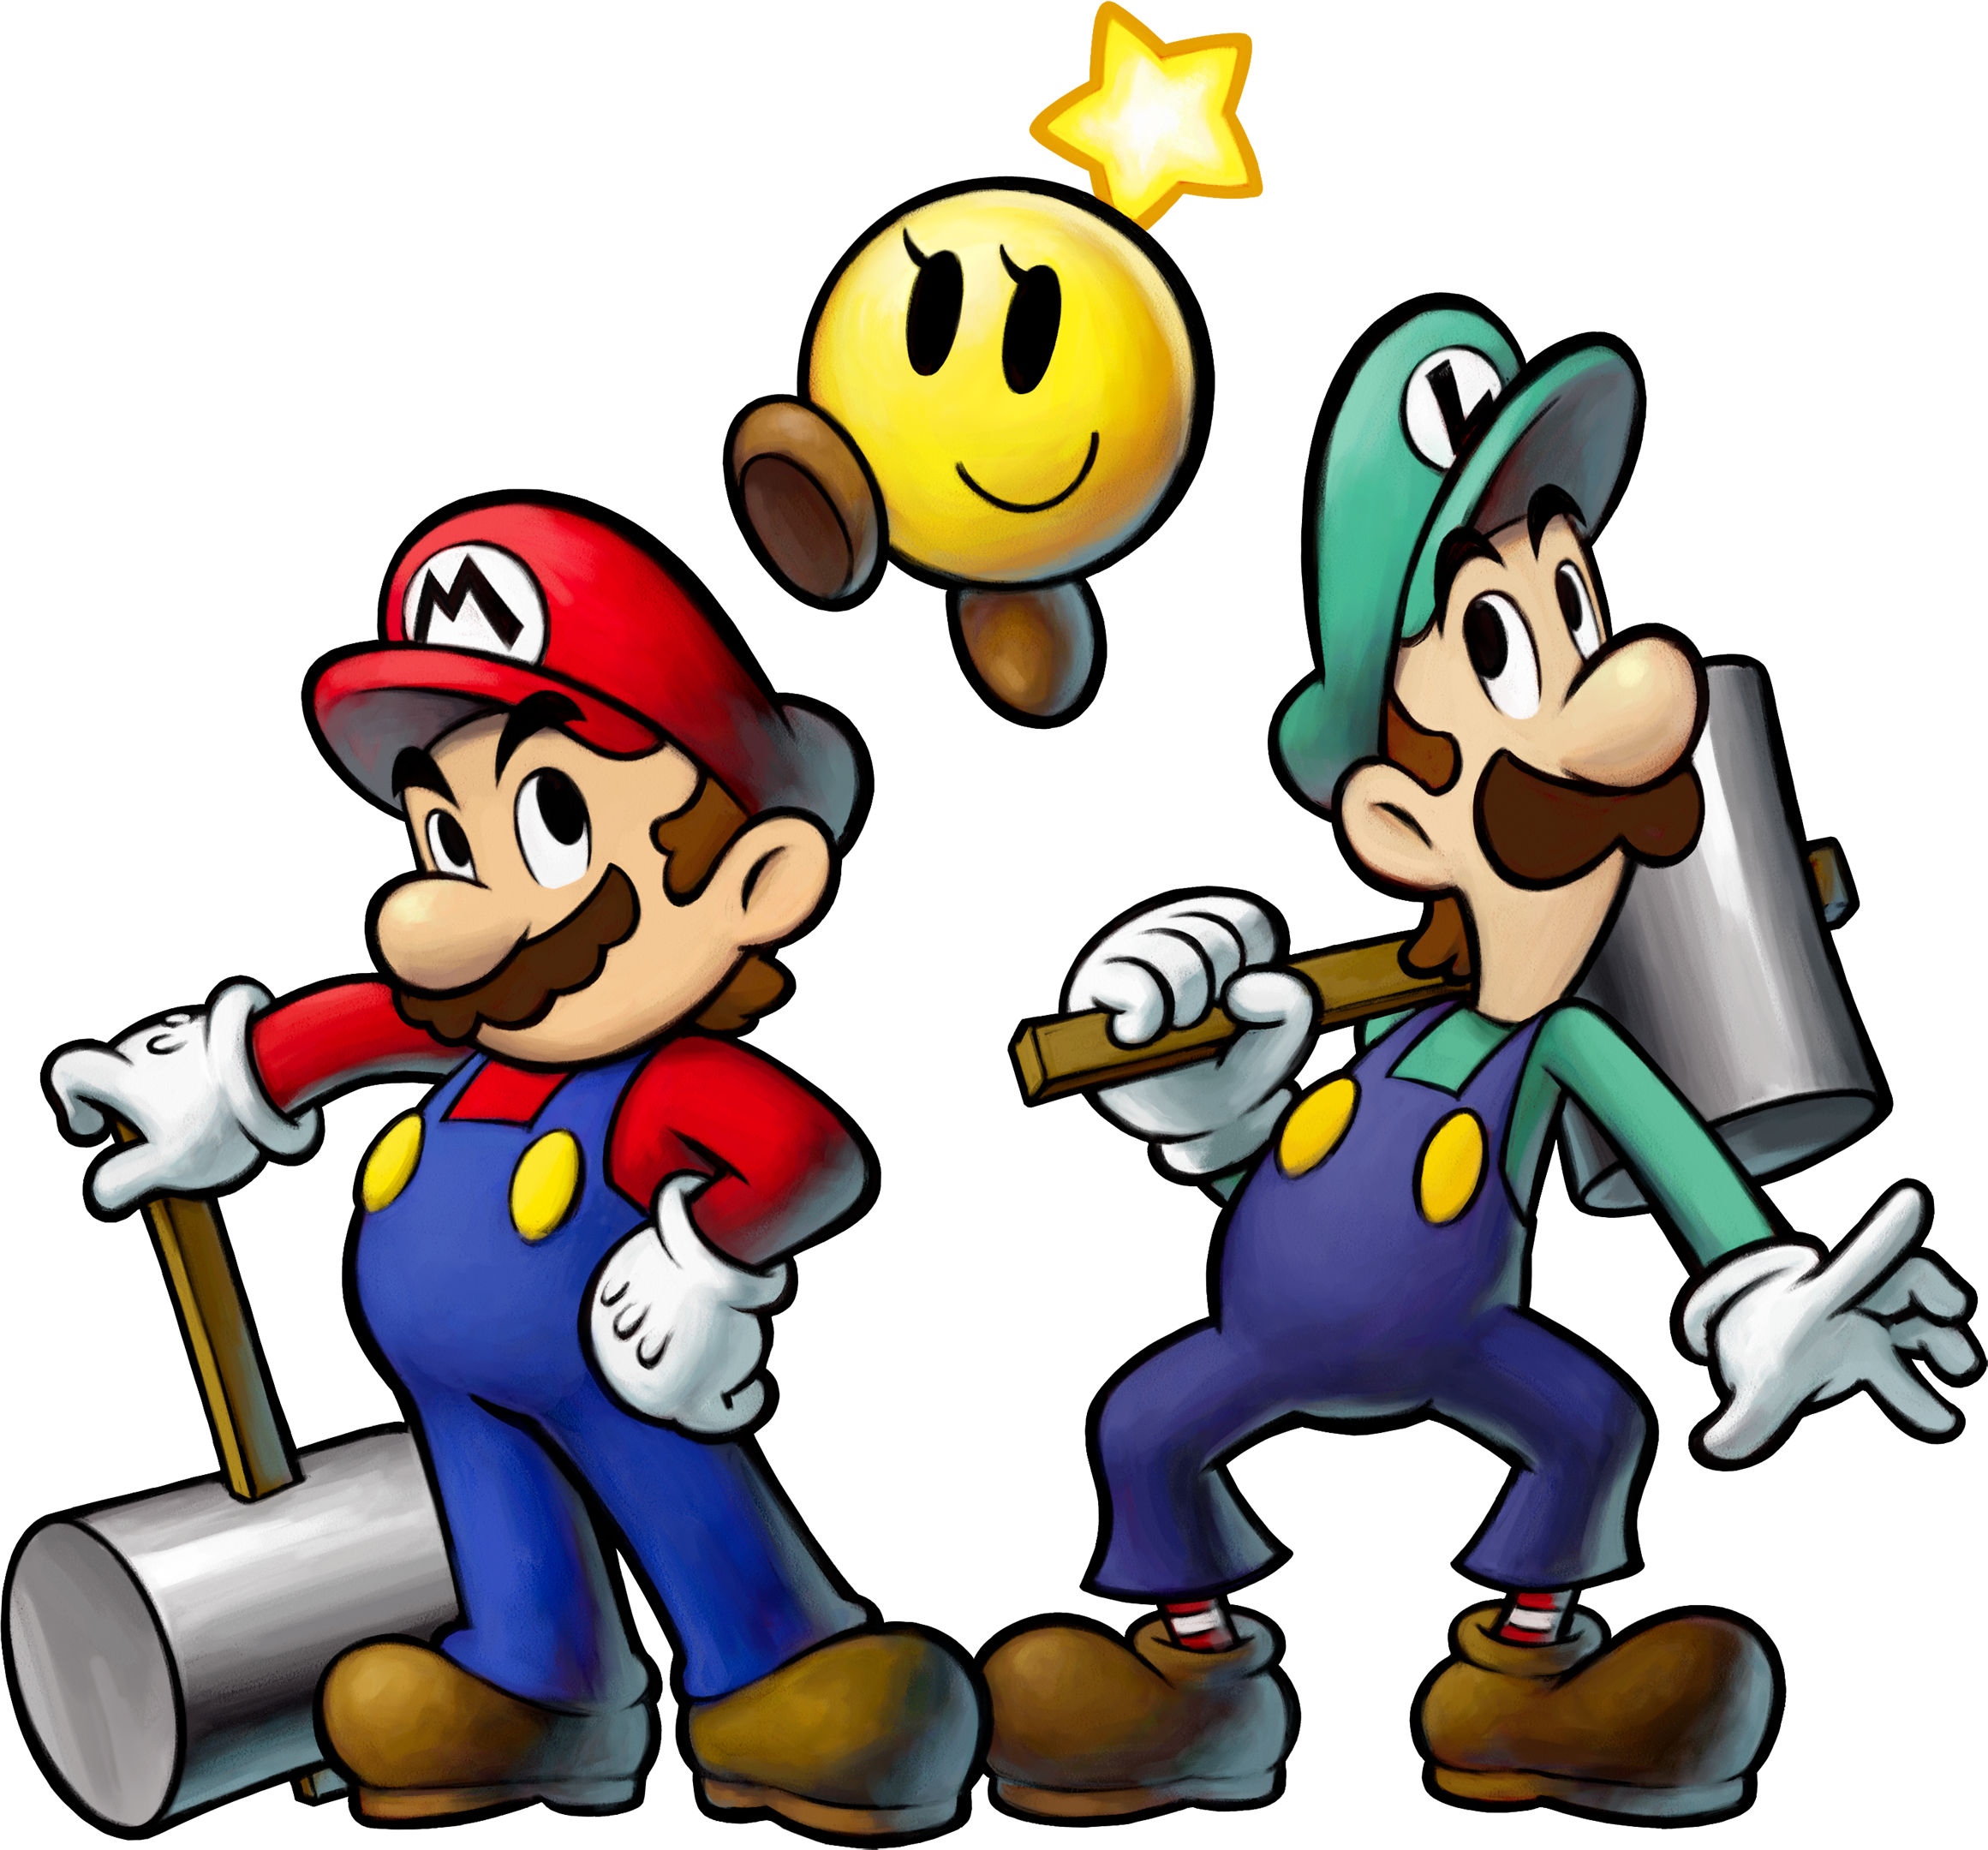 Mario & Luigi: Bowsers inside story (DS) Artwork including enemies ...